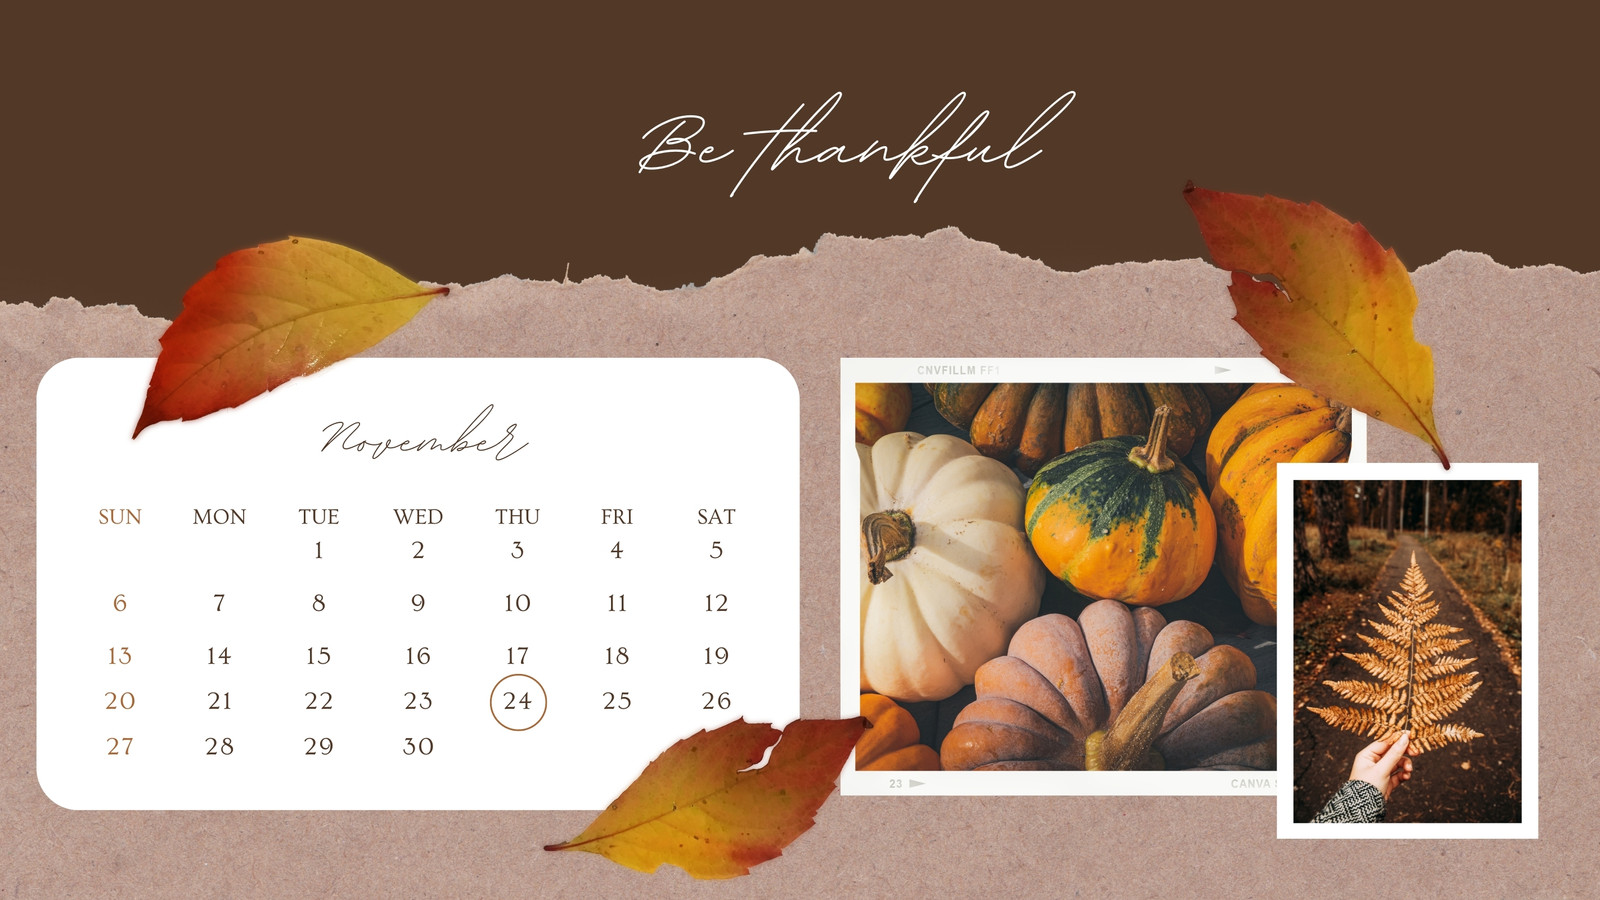 Happy Thanksgiving Wallpaper HD to celebrate Thanksgiving Day   PixelsTalkNet